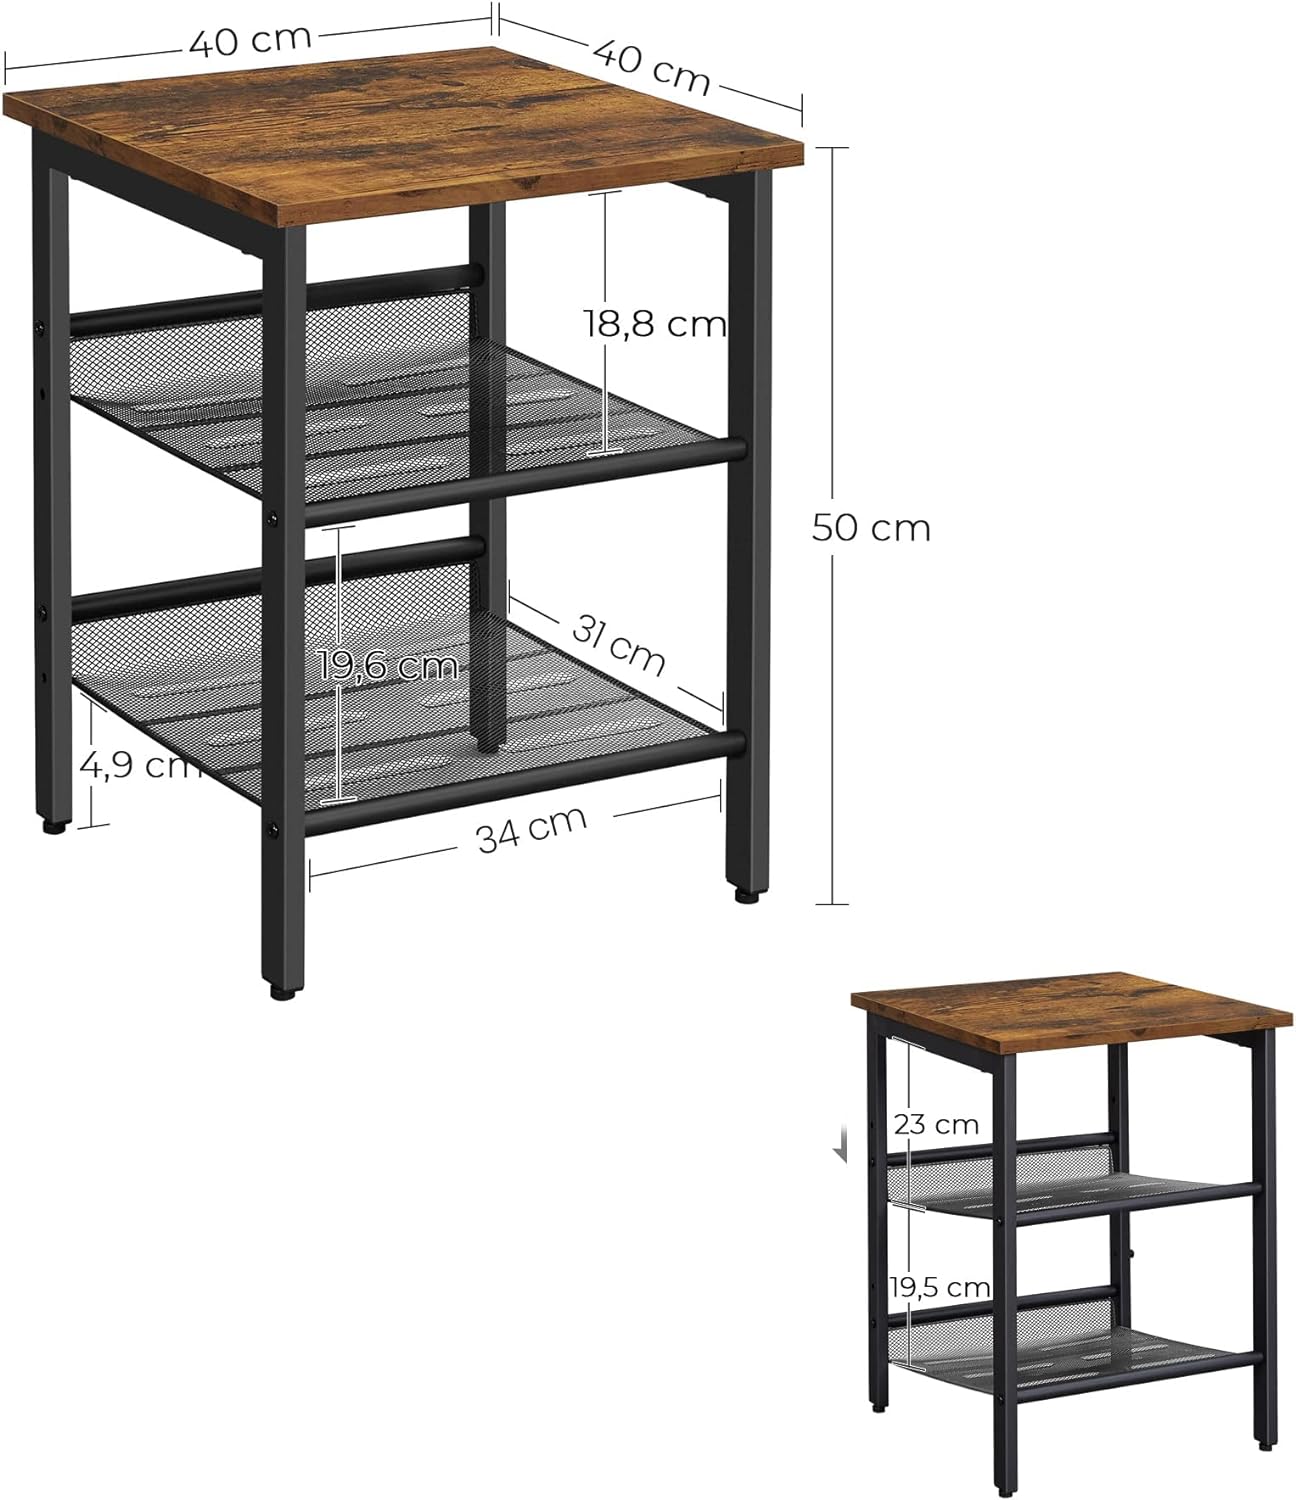 VASAGLE Side Table Set Nightstand Industrial Set of 2 Bedside Tables with Adjustable Mesh Shelves Rustic Brown and Black